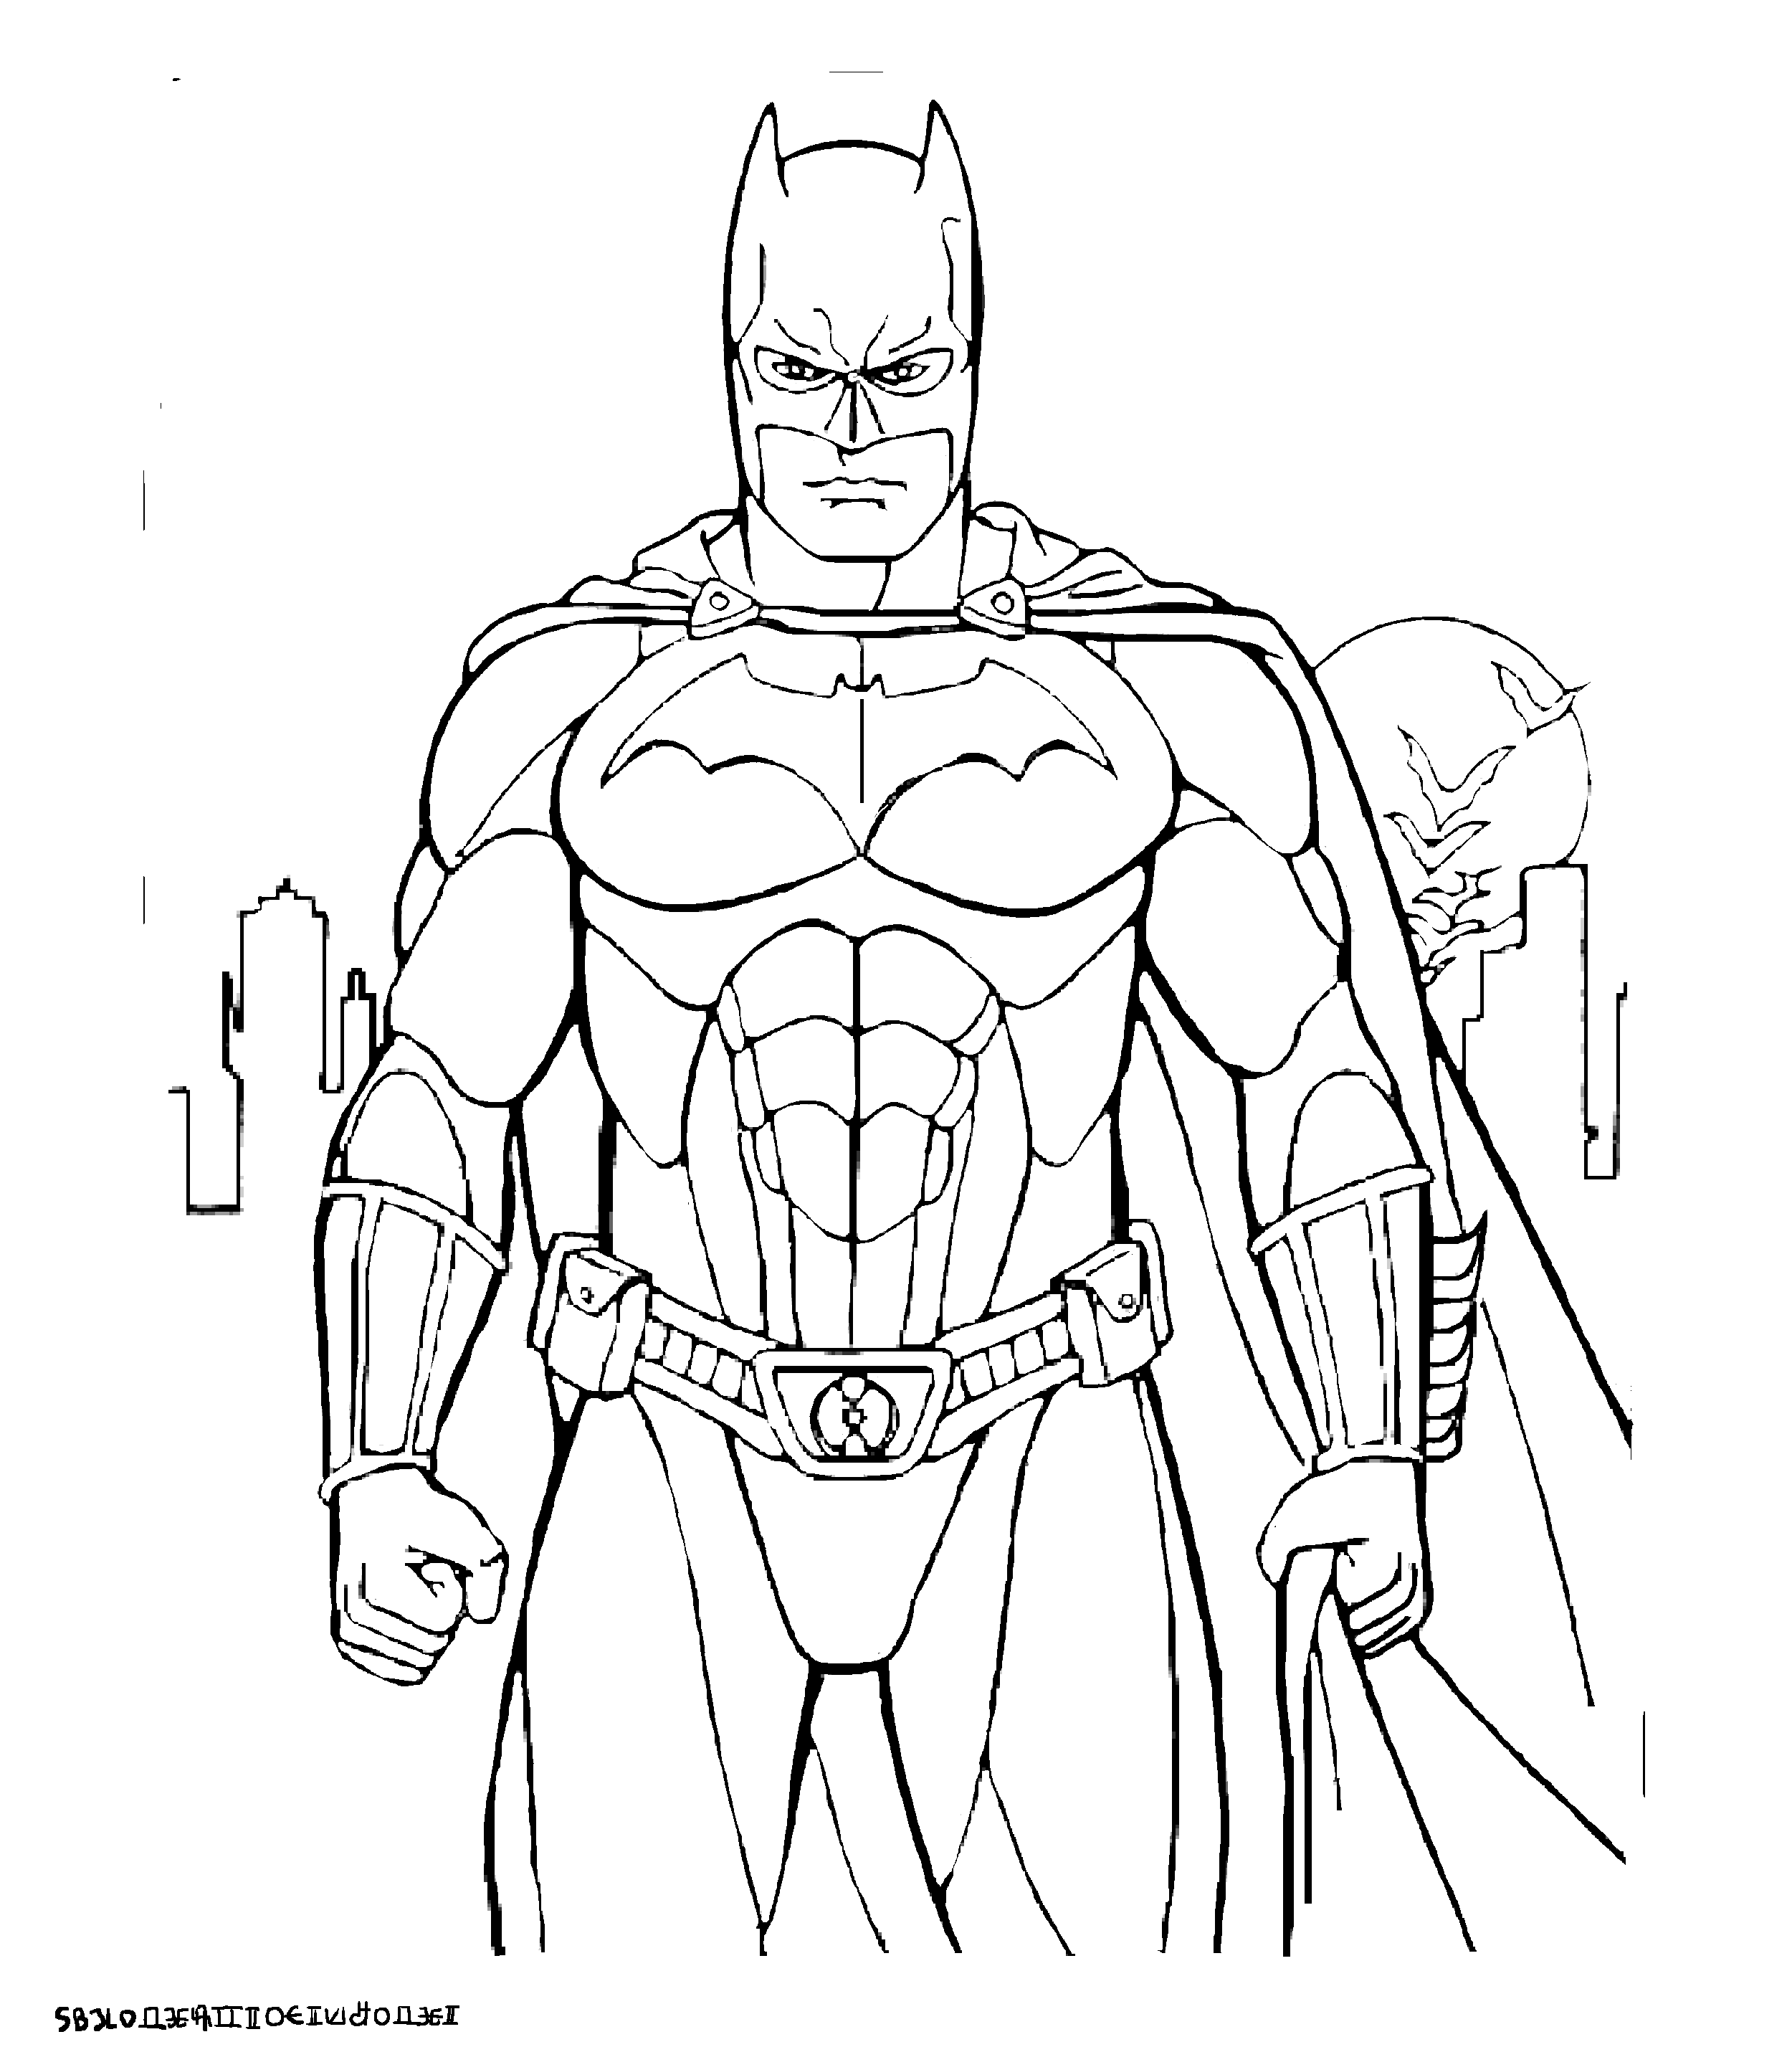 Michael Keaton Batman Drawing by artoflunatik on DeviantArt